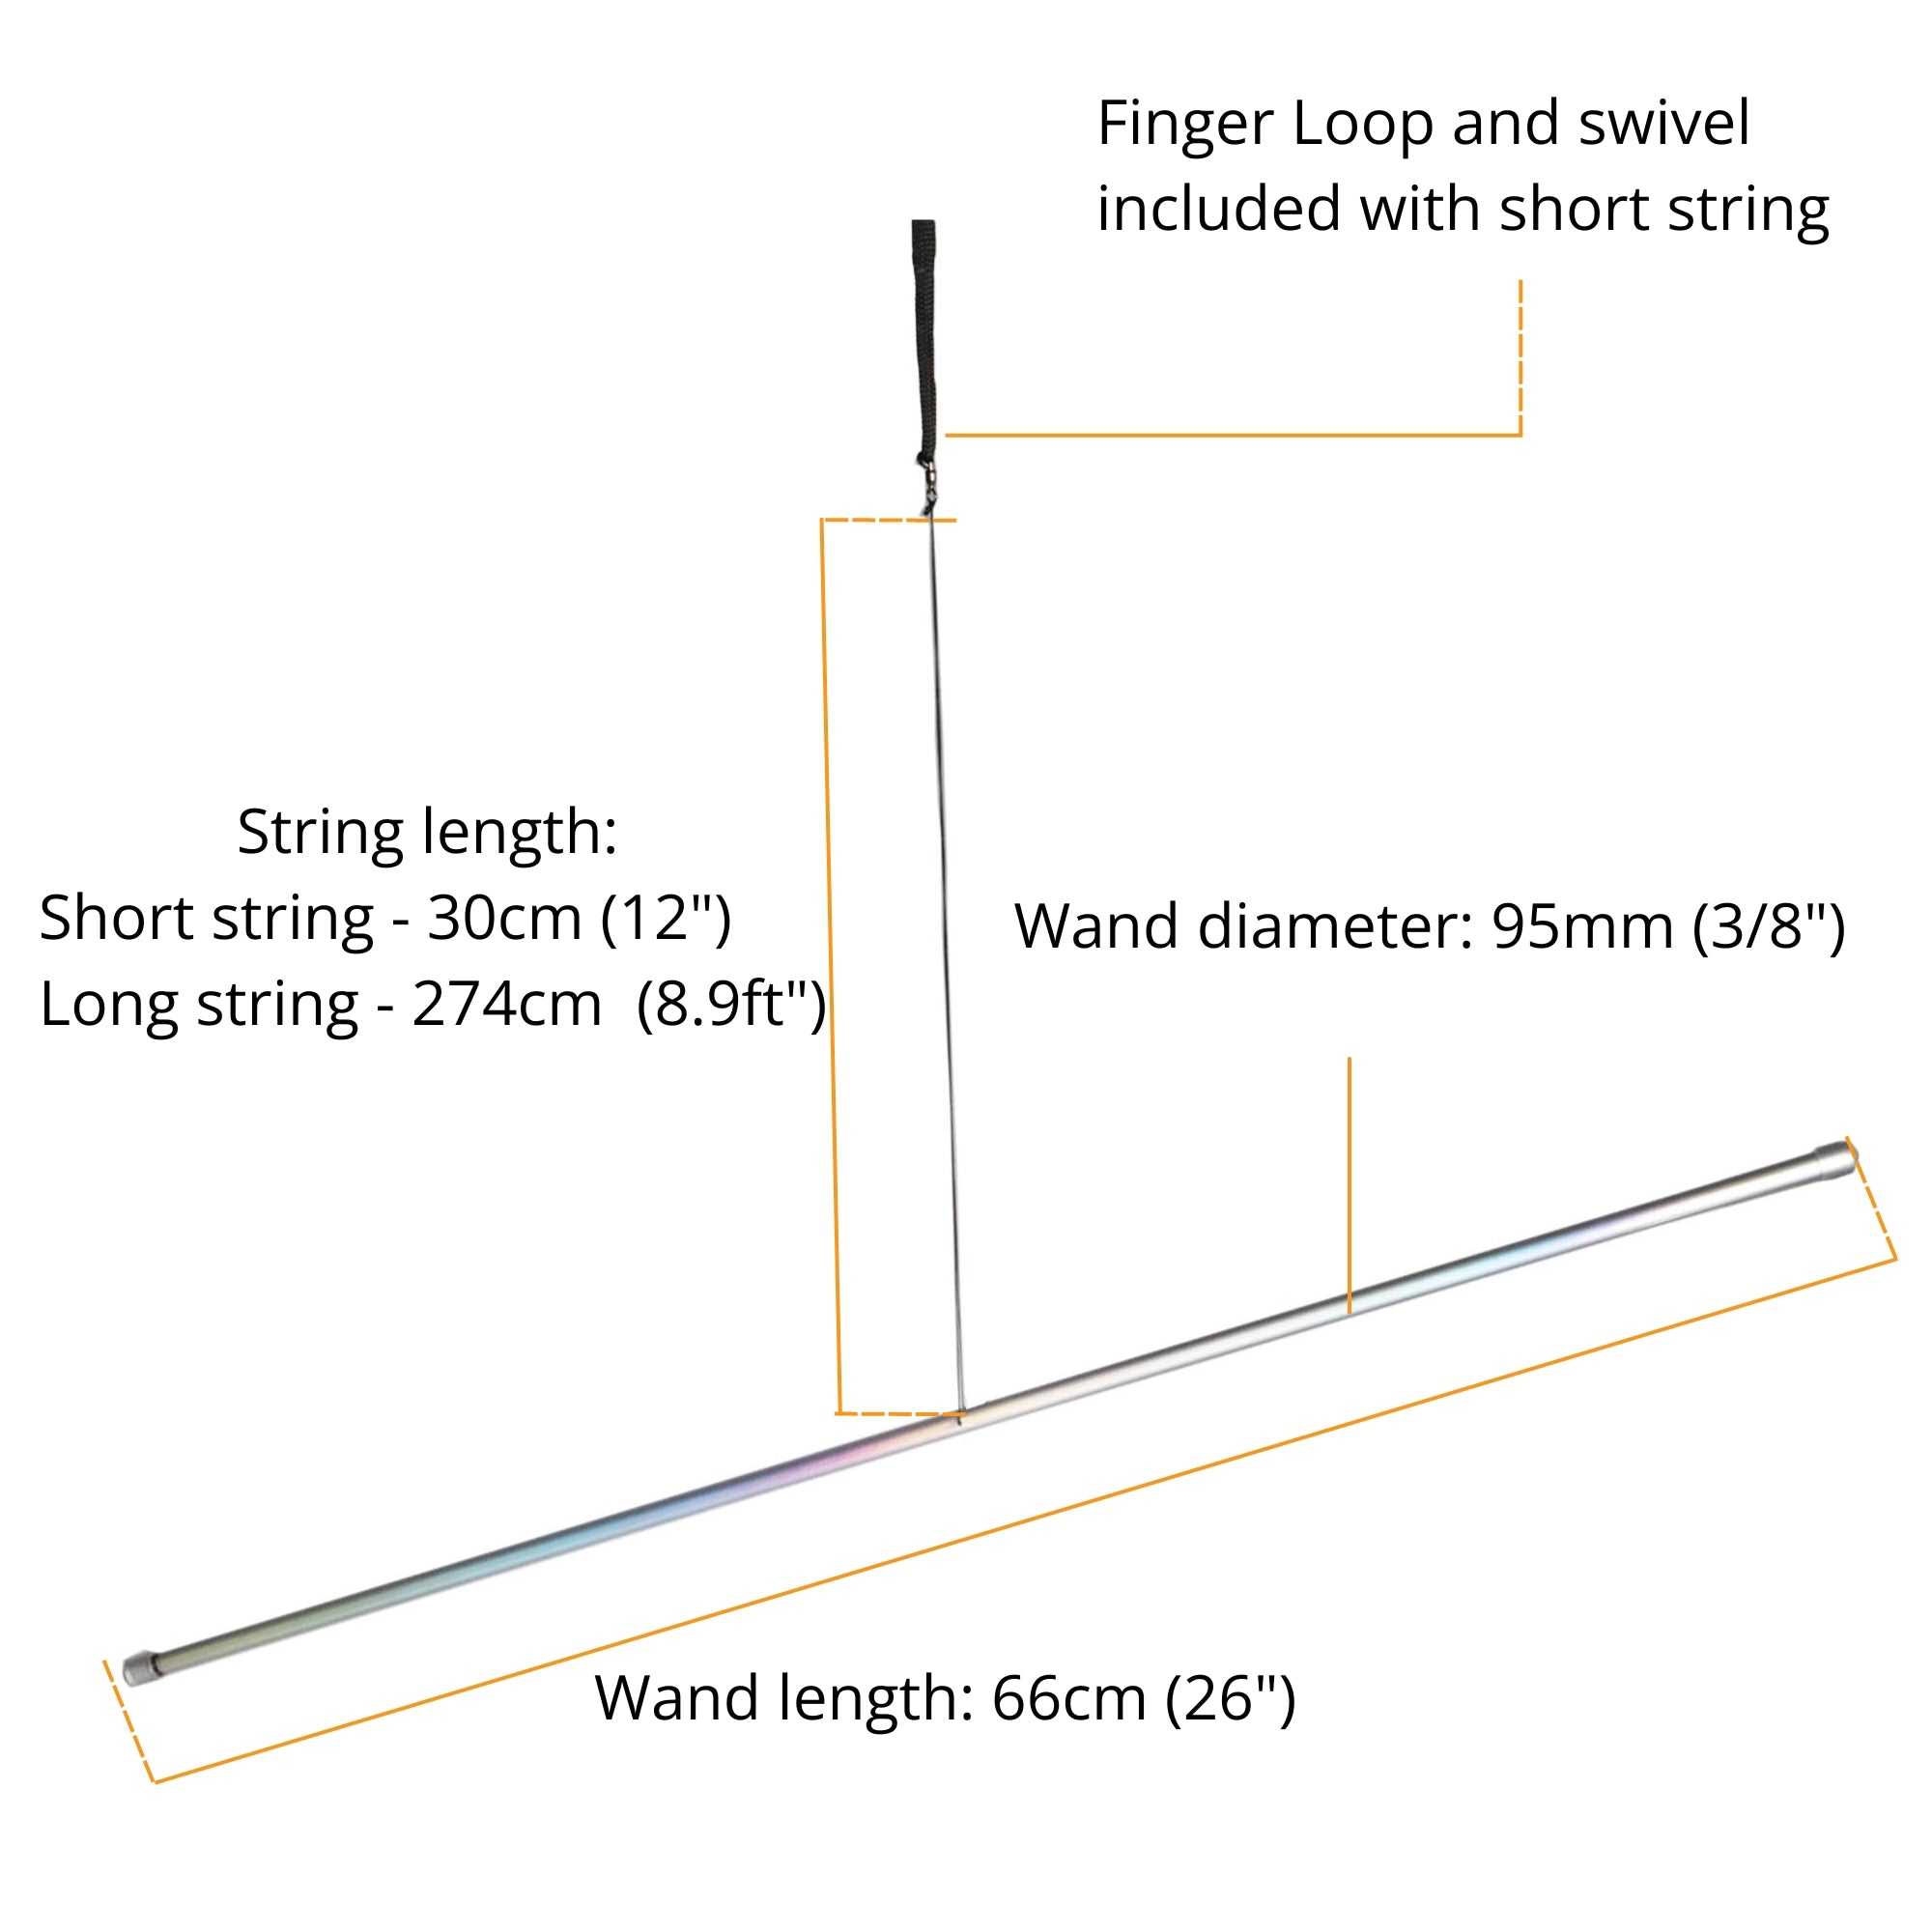 wand measurements